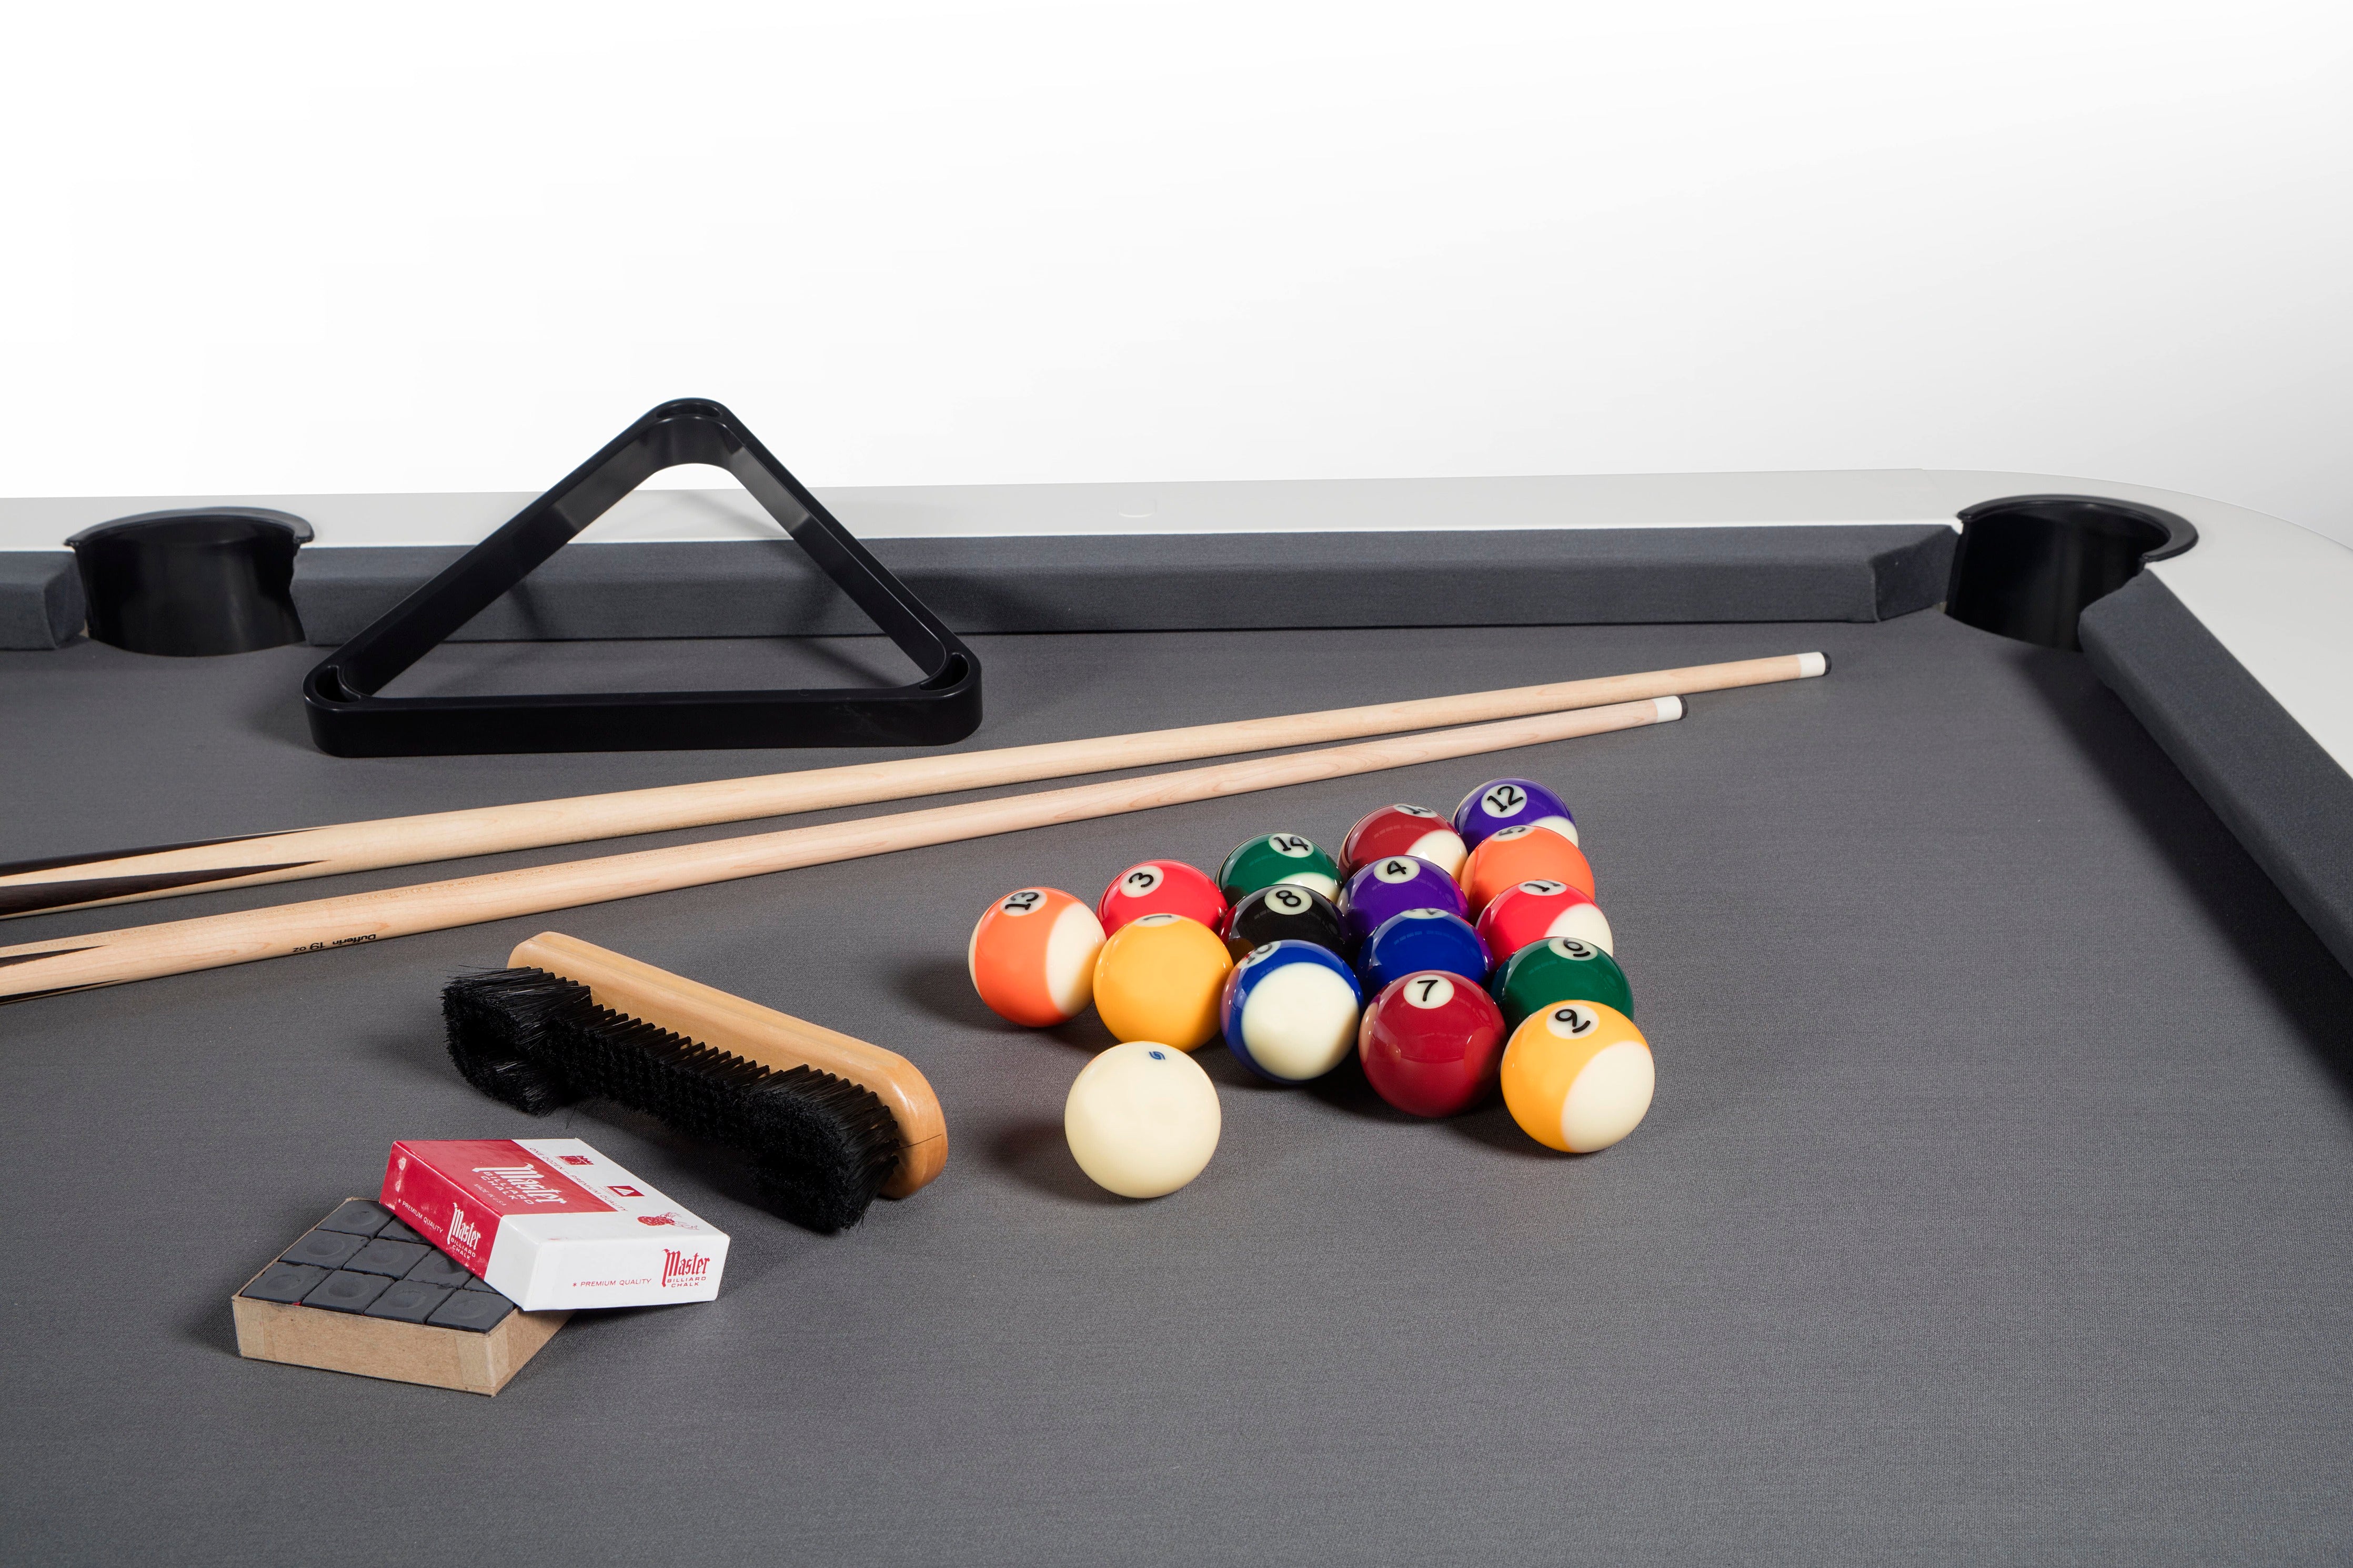 RS Barcelona You and Me Ping Pong Wood Top – Blatt Billiards